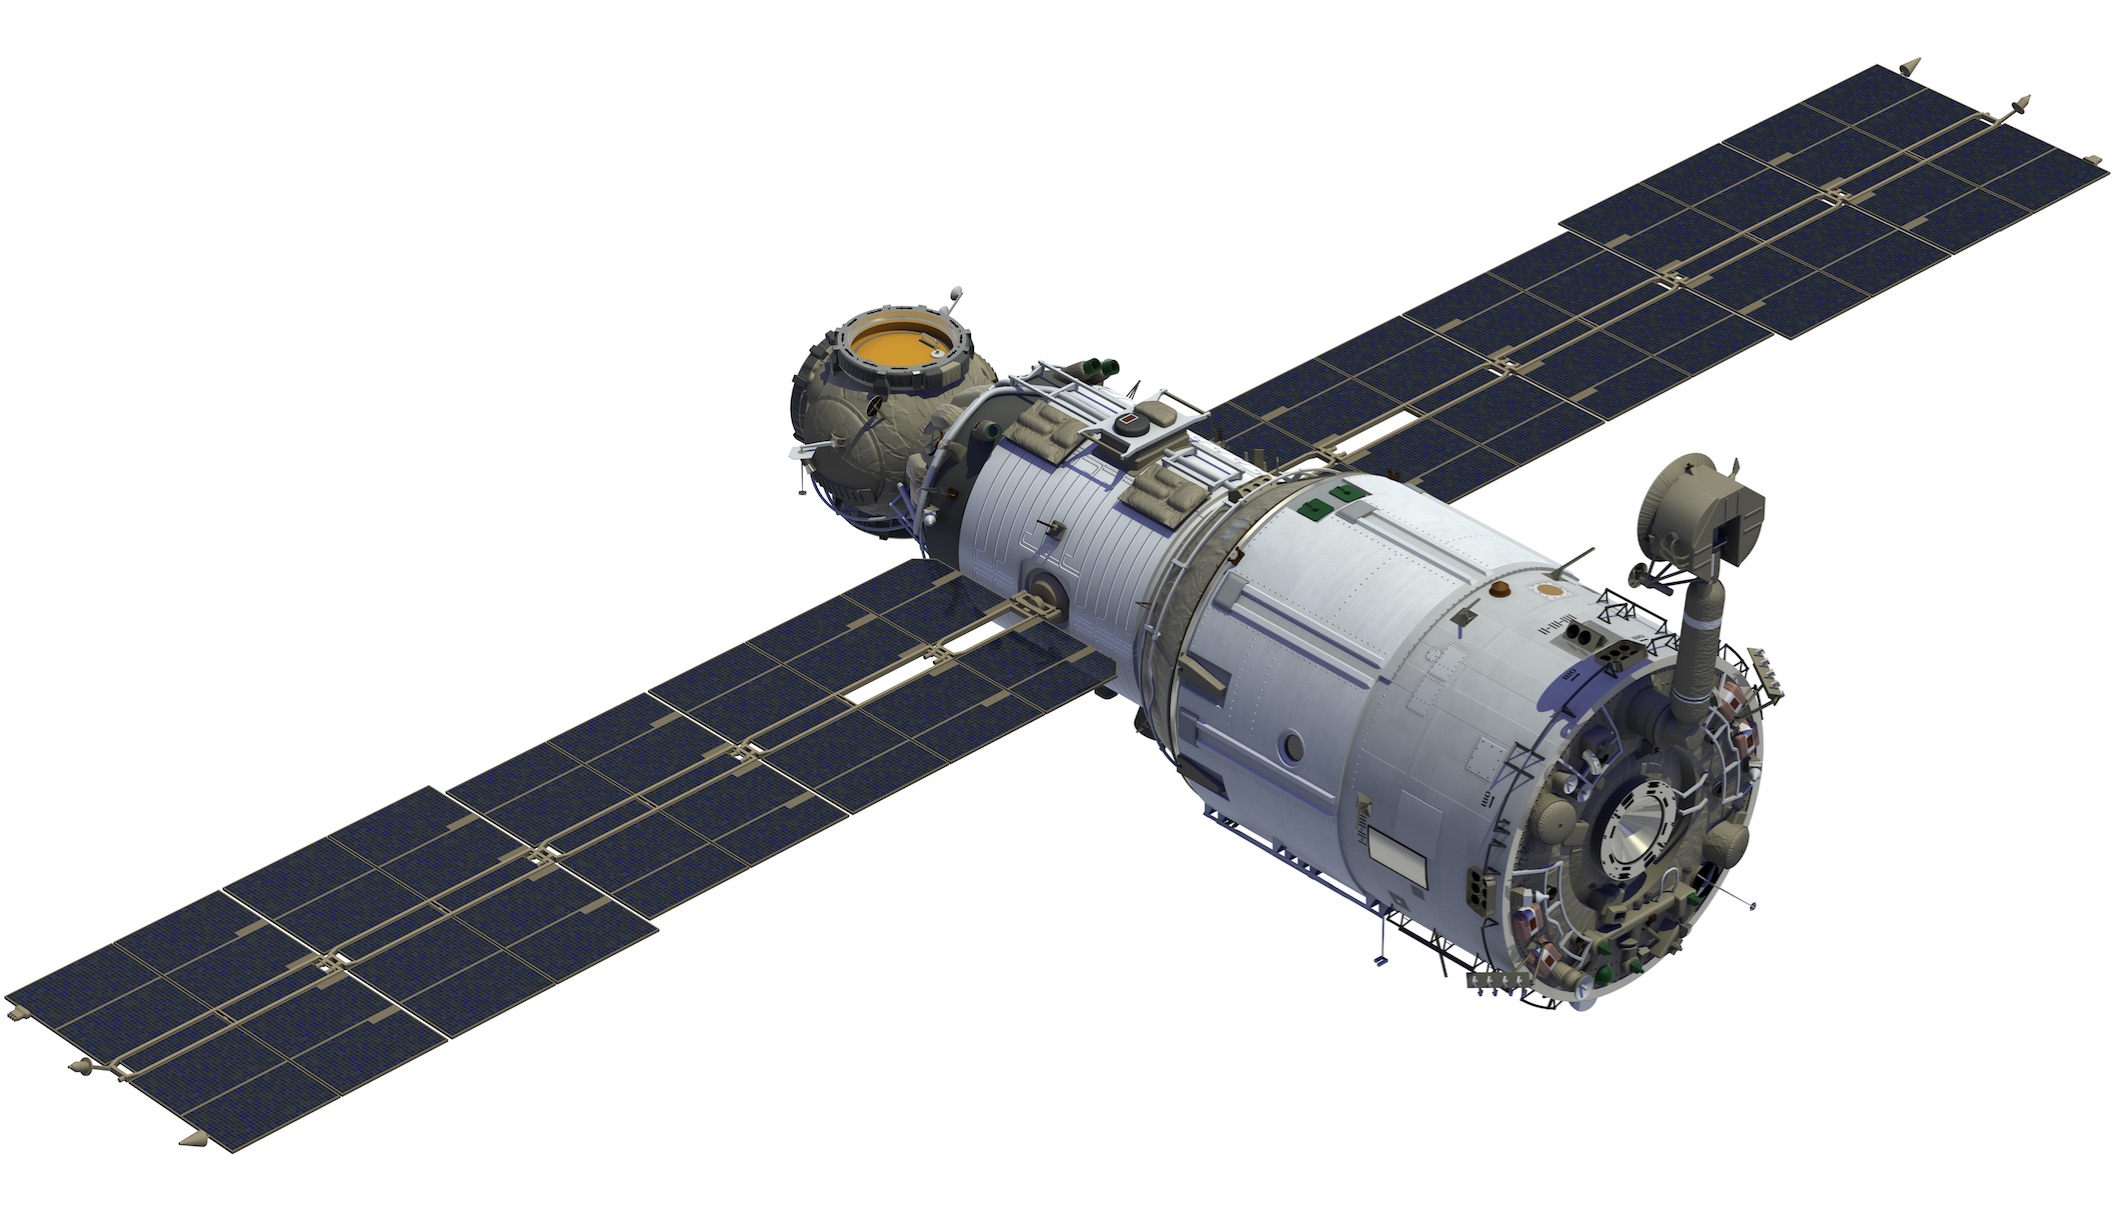 International space station module 2.jpg